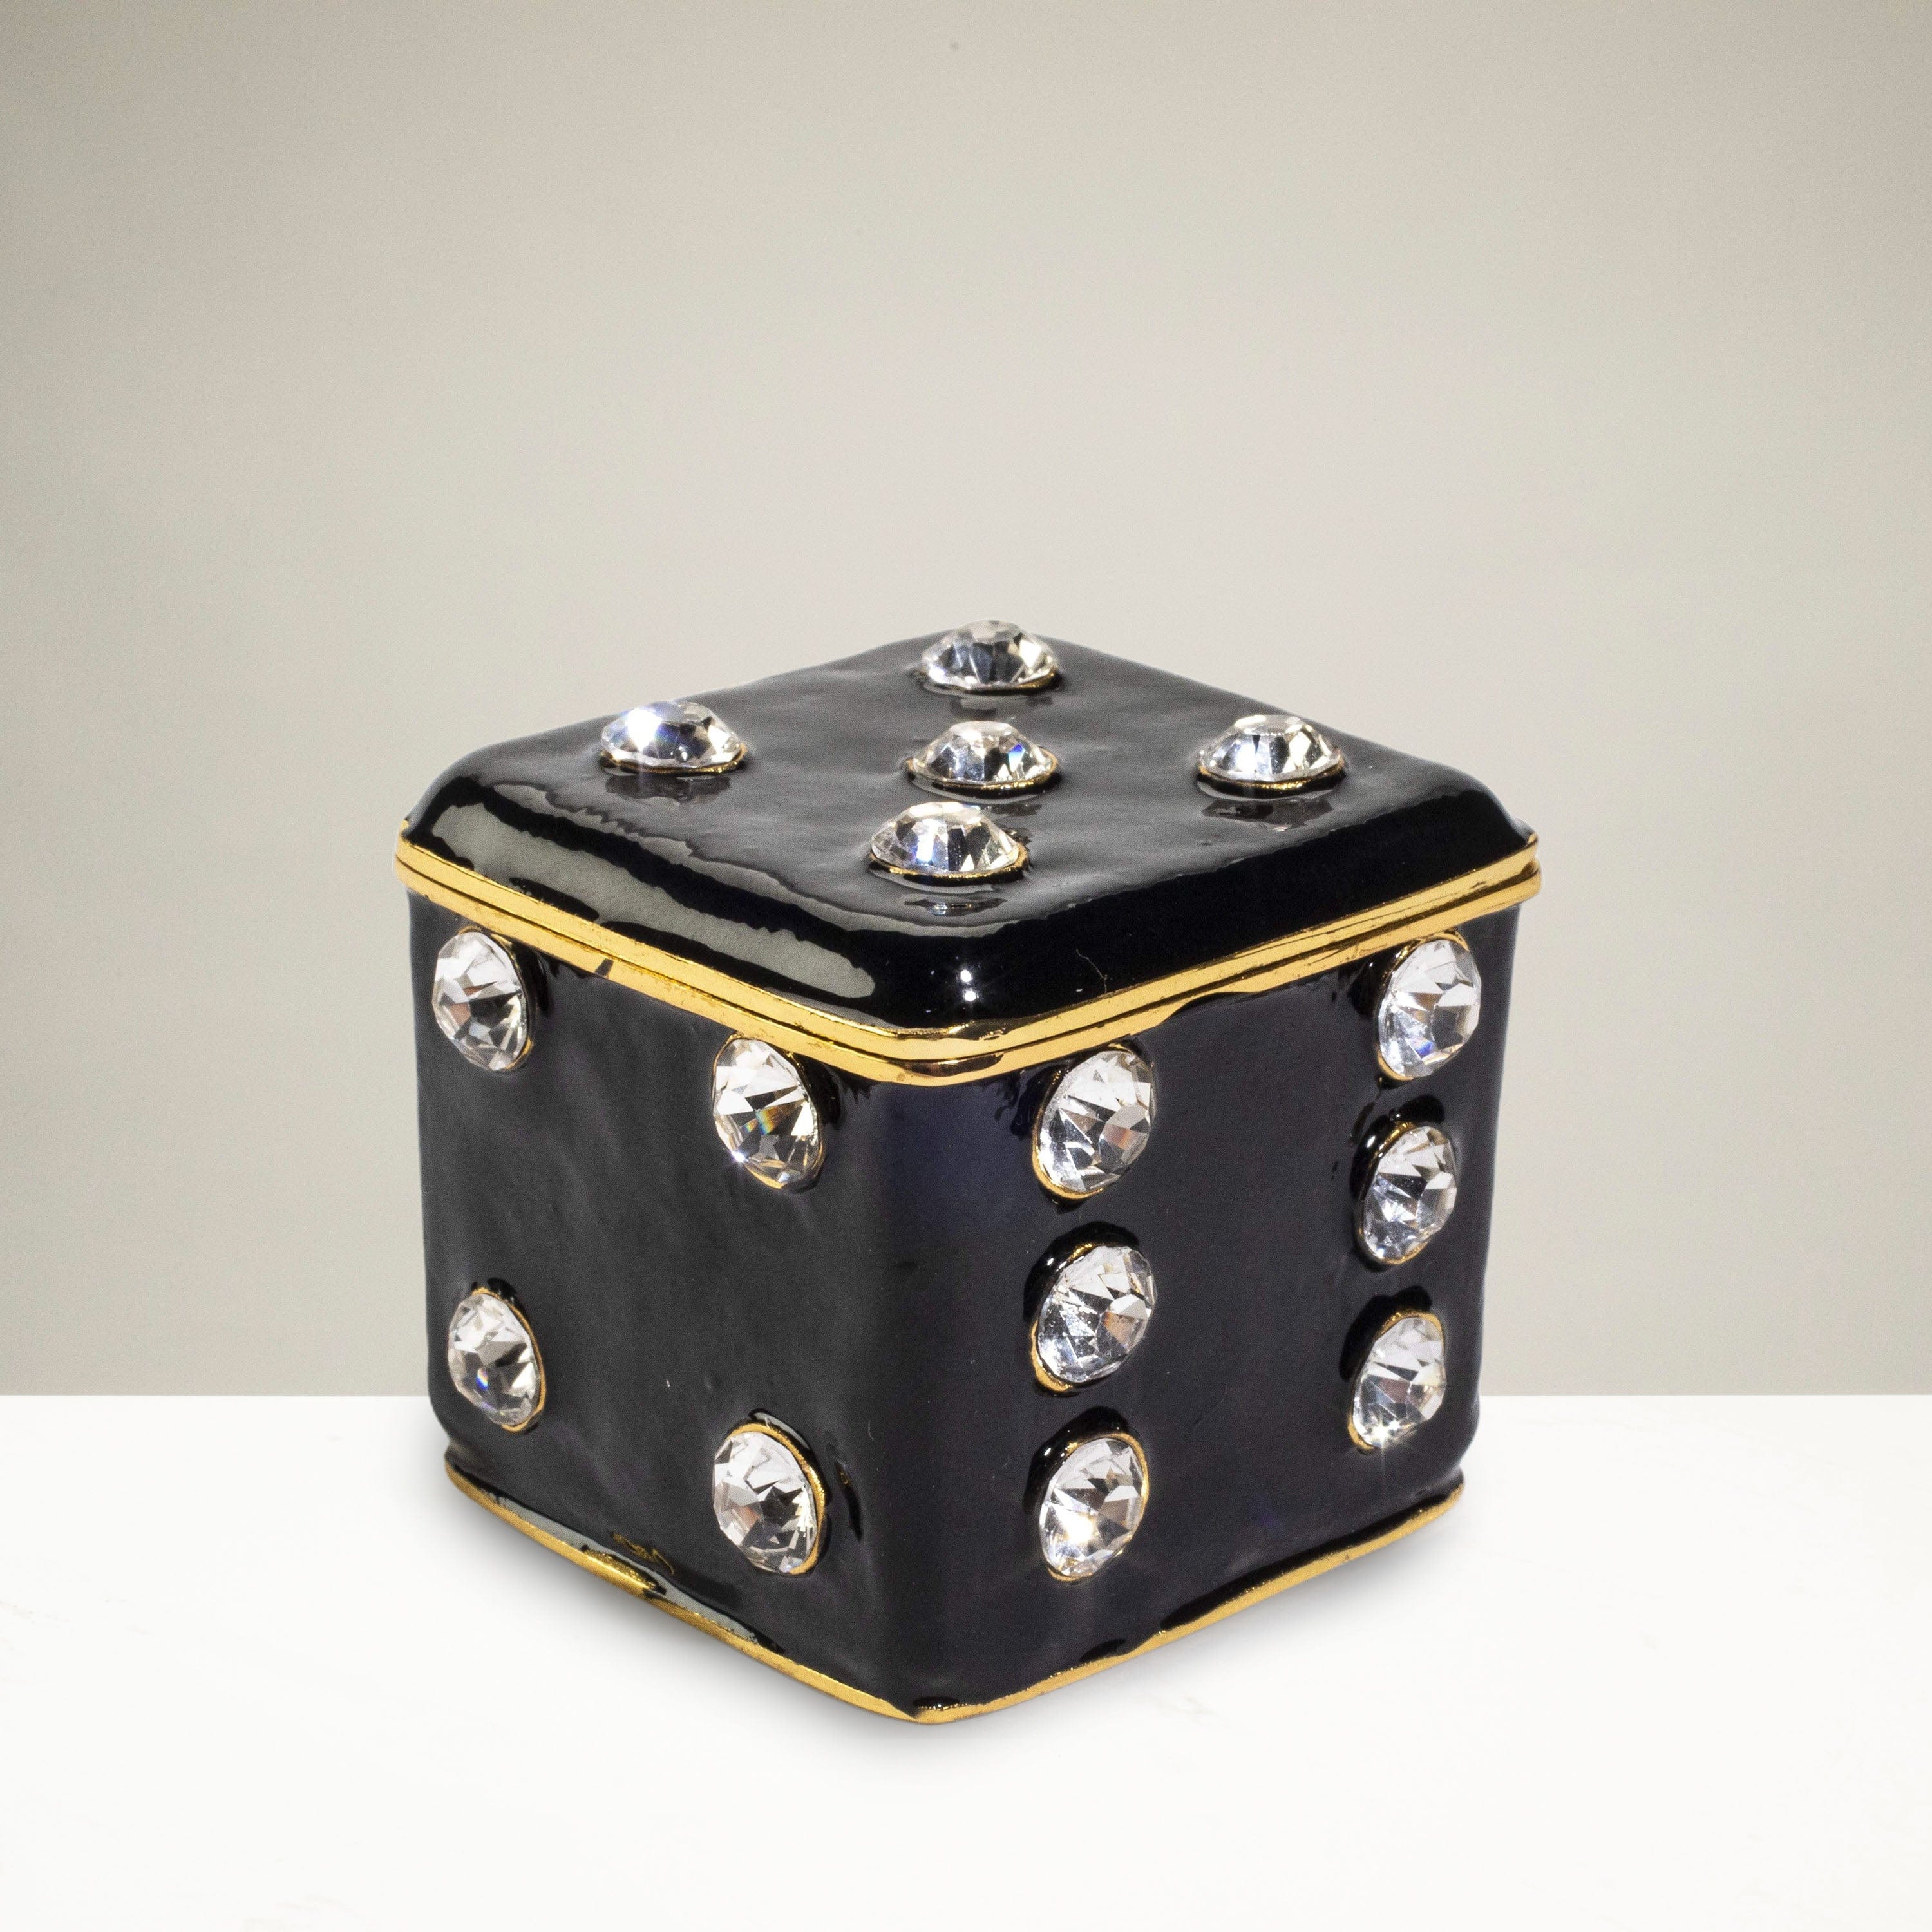 Kalifano Vanity Figurine Dice Figurine Keepsake Box made with Crystals SVA-109